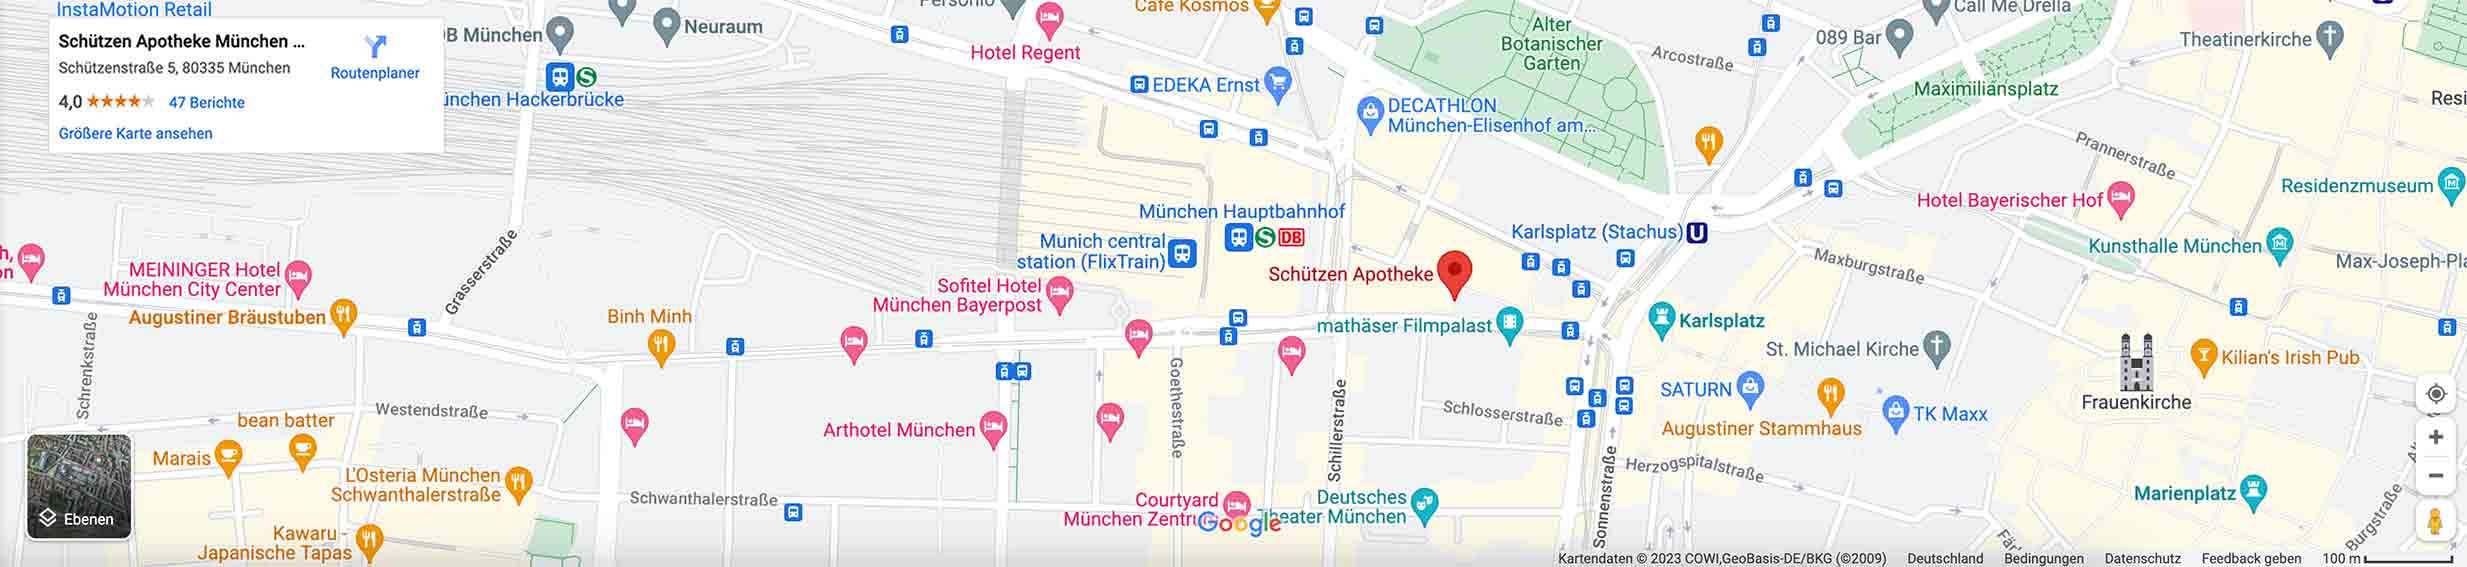 Schützen Apotheke München Google Karte